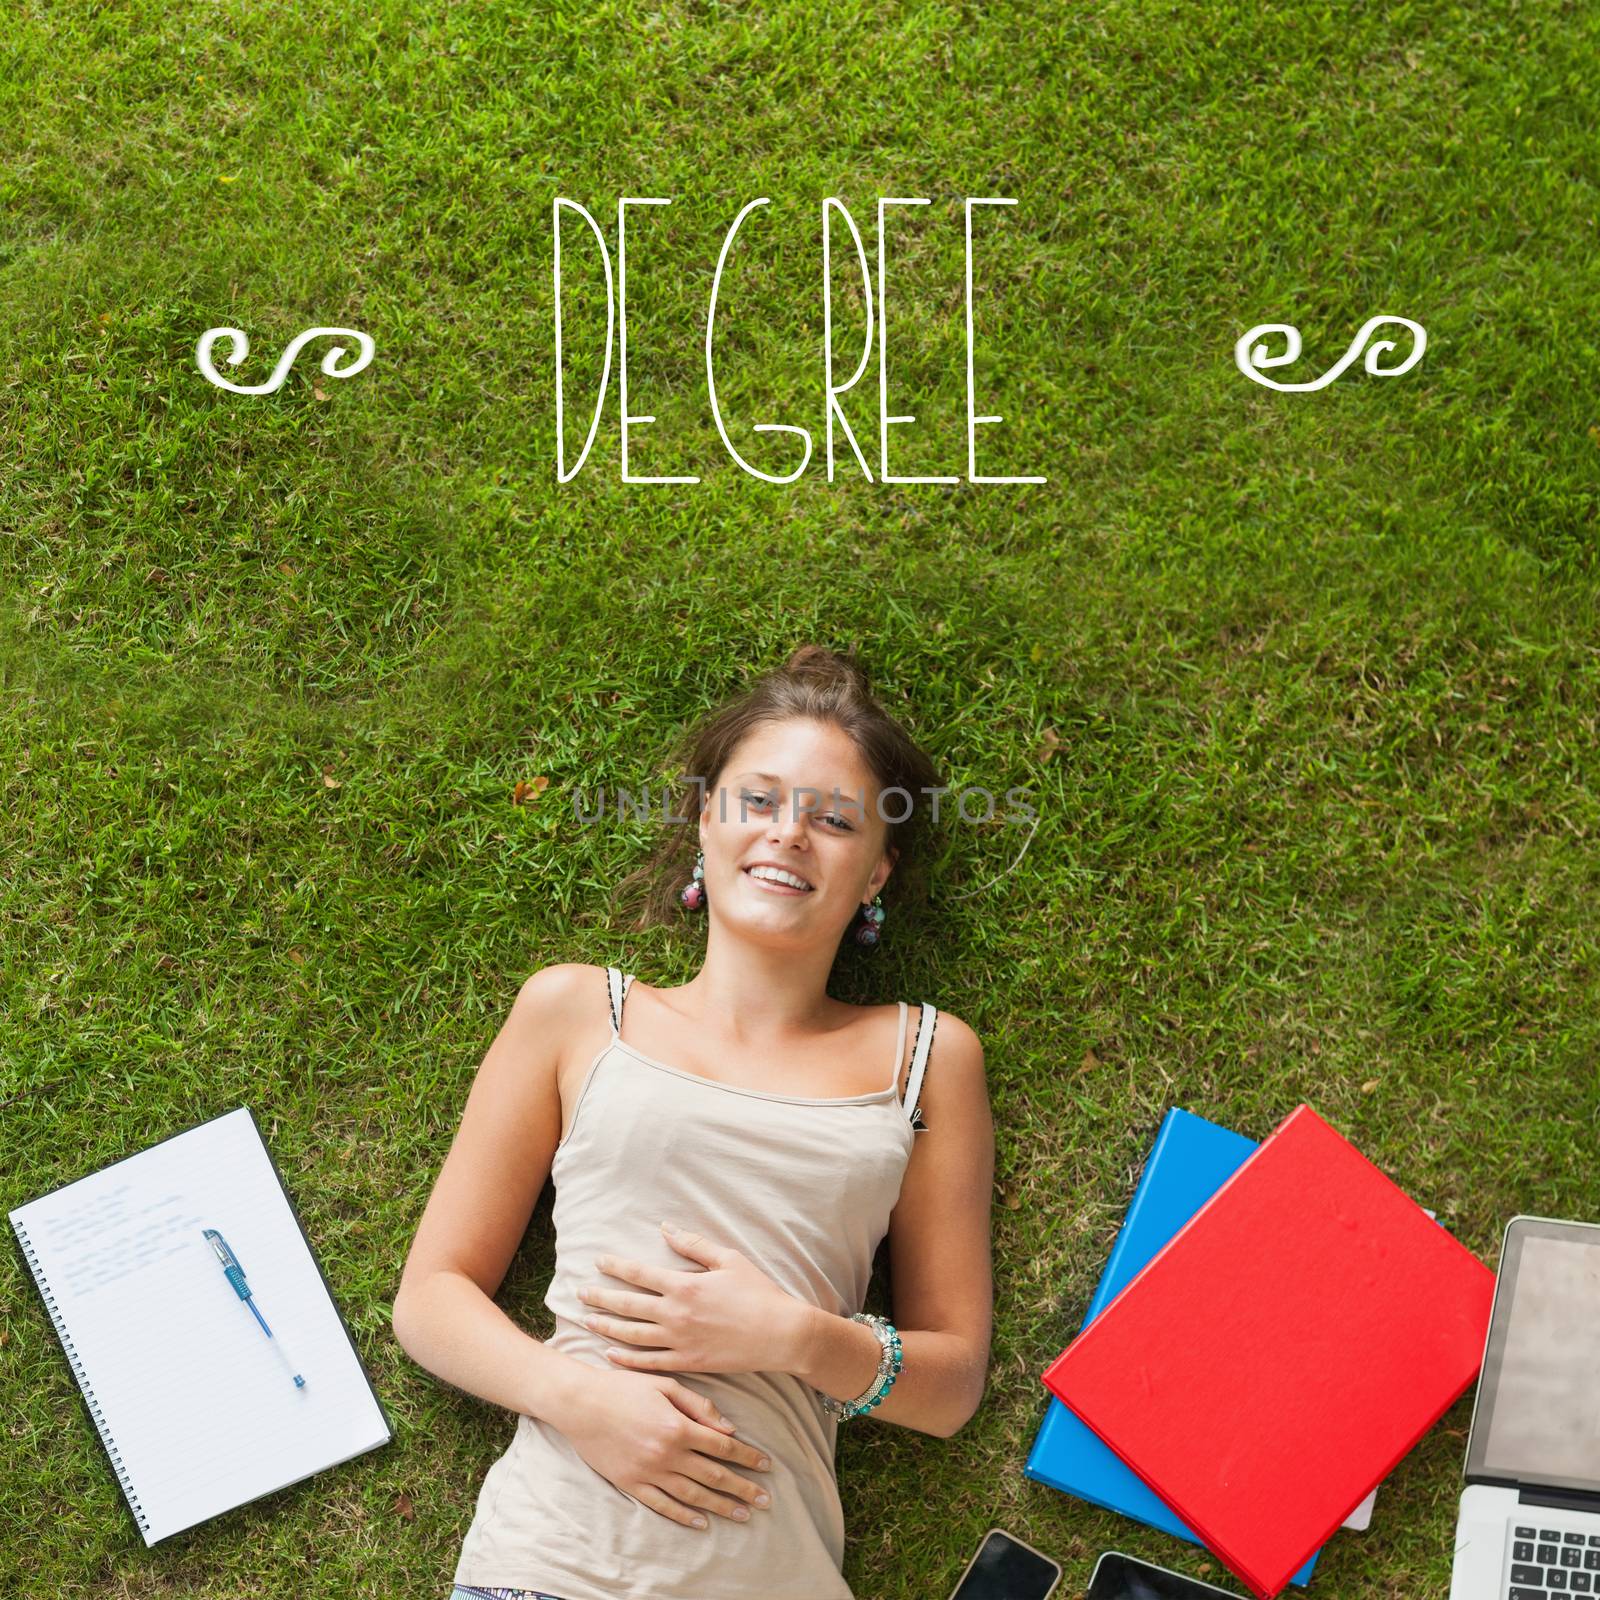 Degree against pretty student lying on grass by Wavebreakmedia